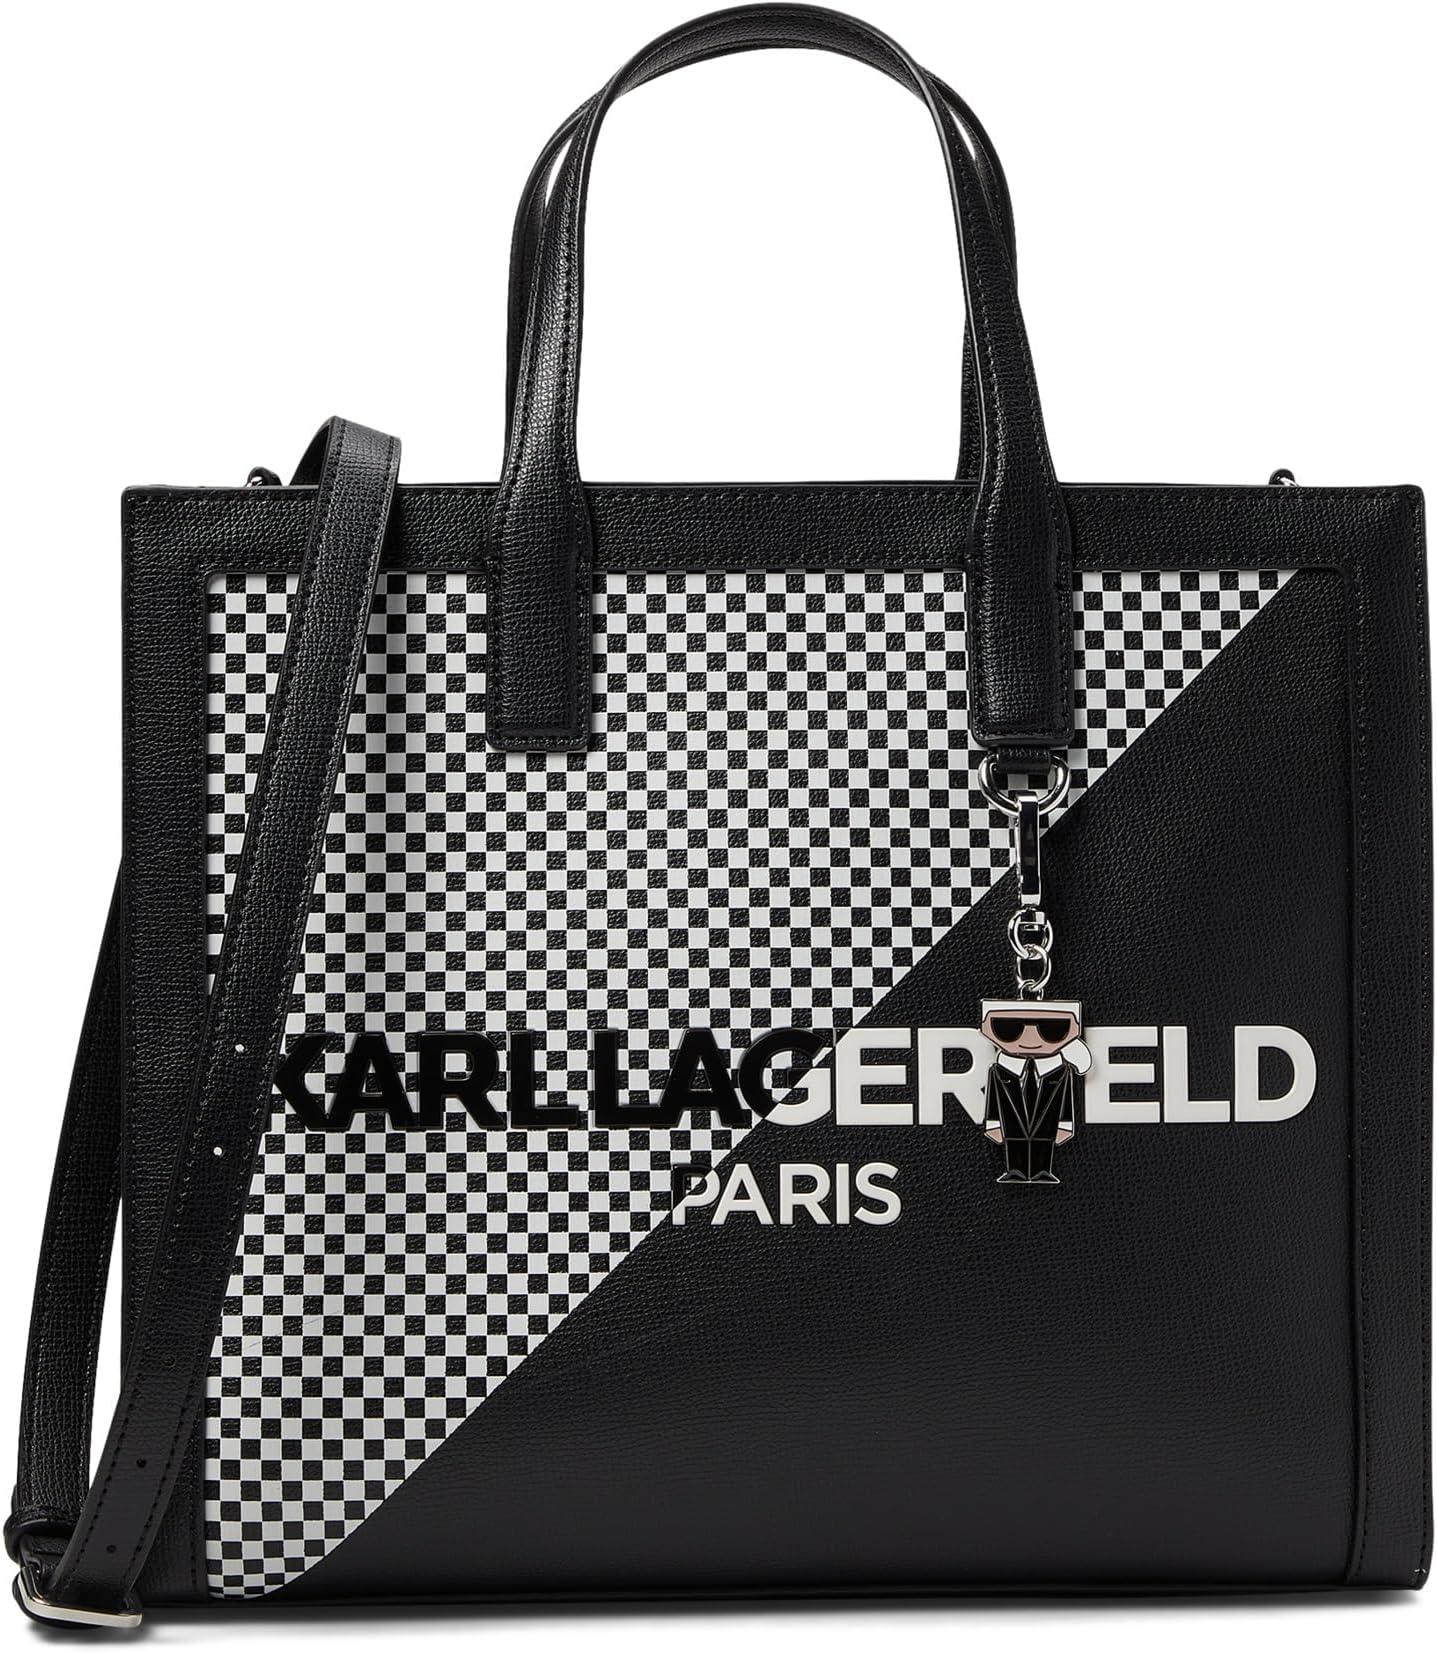 Сумка-тоут в стиле модерн Karl Lagerfeld Paris, цвет Black/White/Black форинская сумка karl lagerfeld paris цвет black white